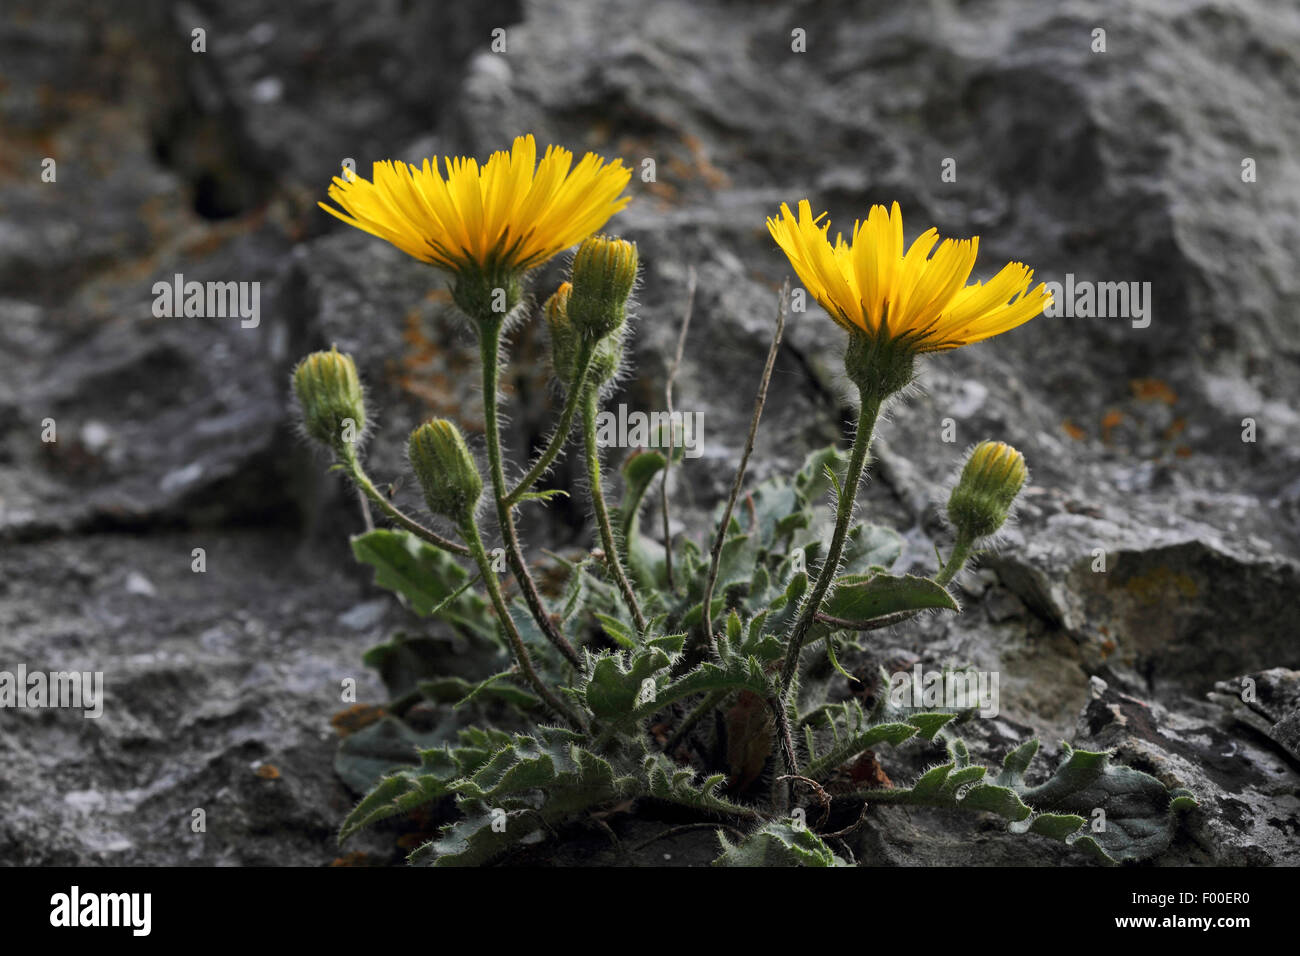 Dawarf hawkweed (Hieracium humile), blooming between rocks, Germany Stock Photo